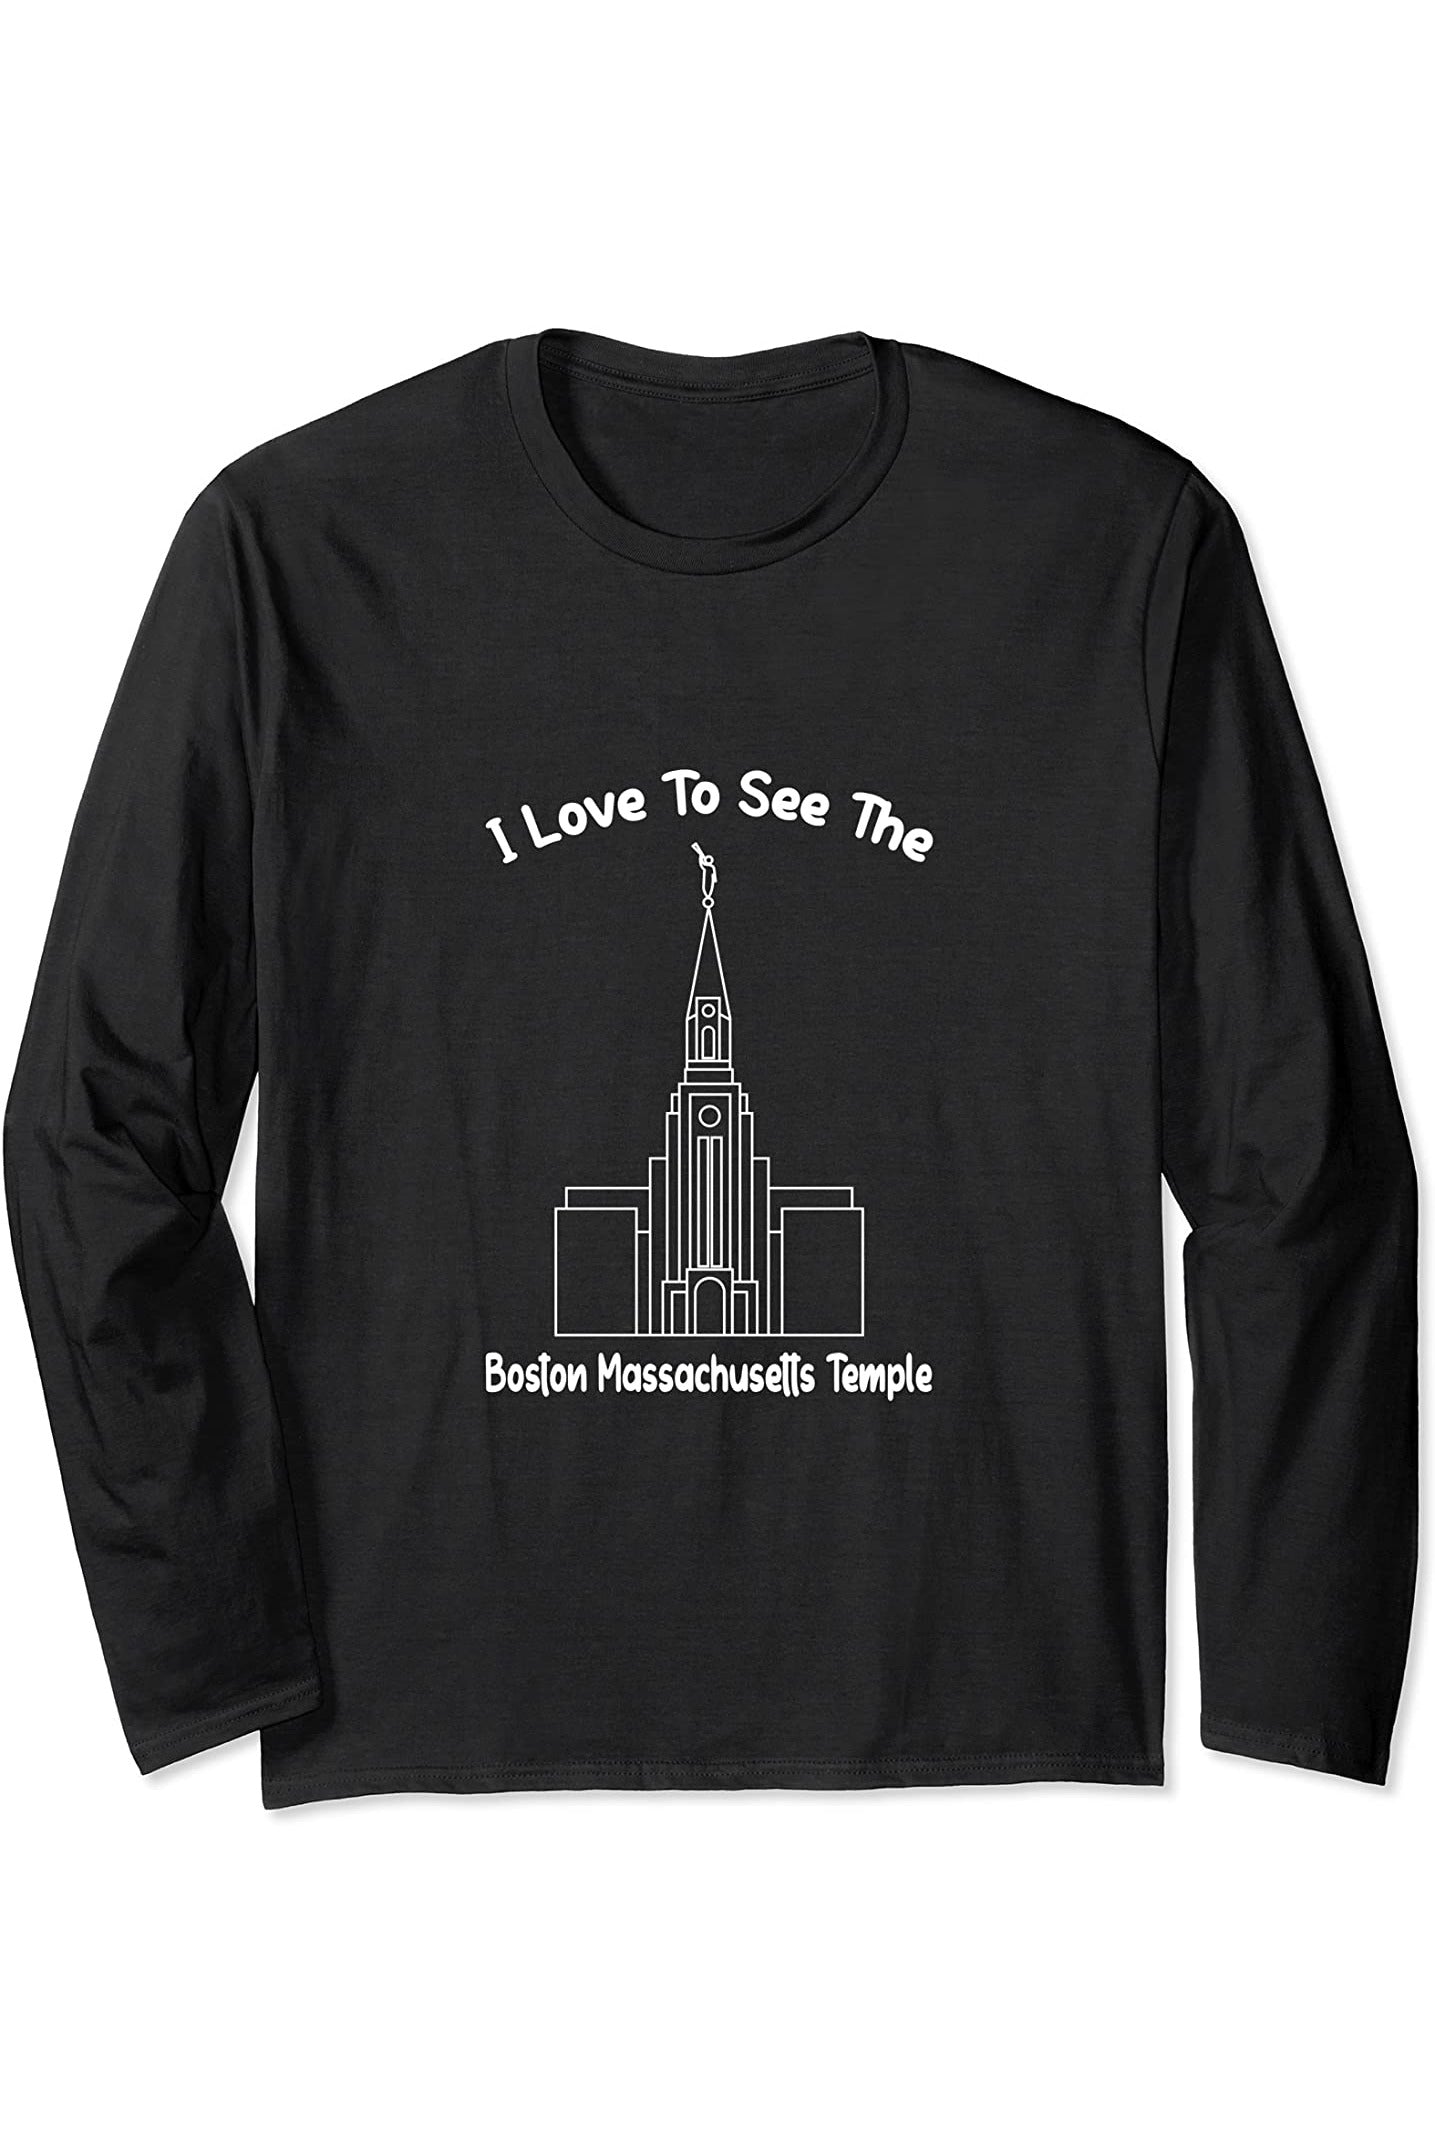 Boston Massachusetts Temple Long Sleeve T-Shirt - Primary Style (English) US